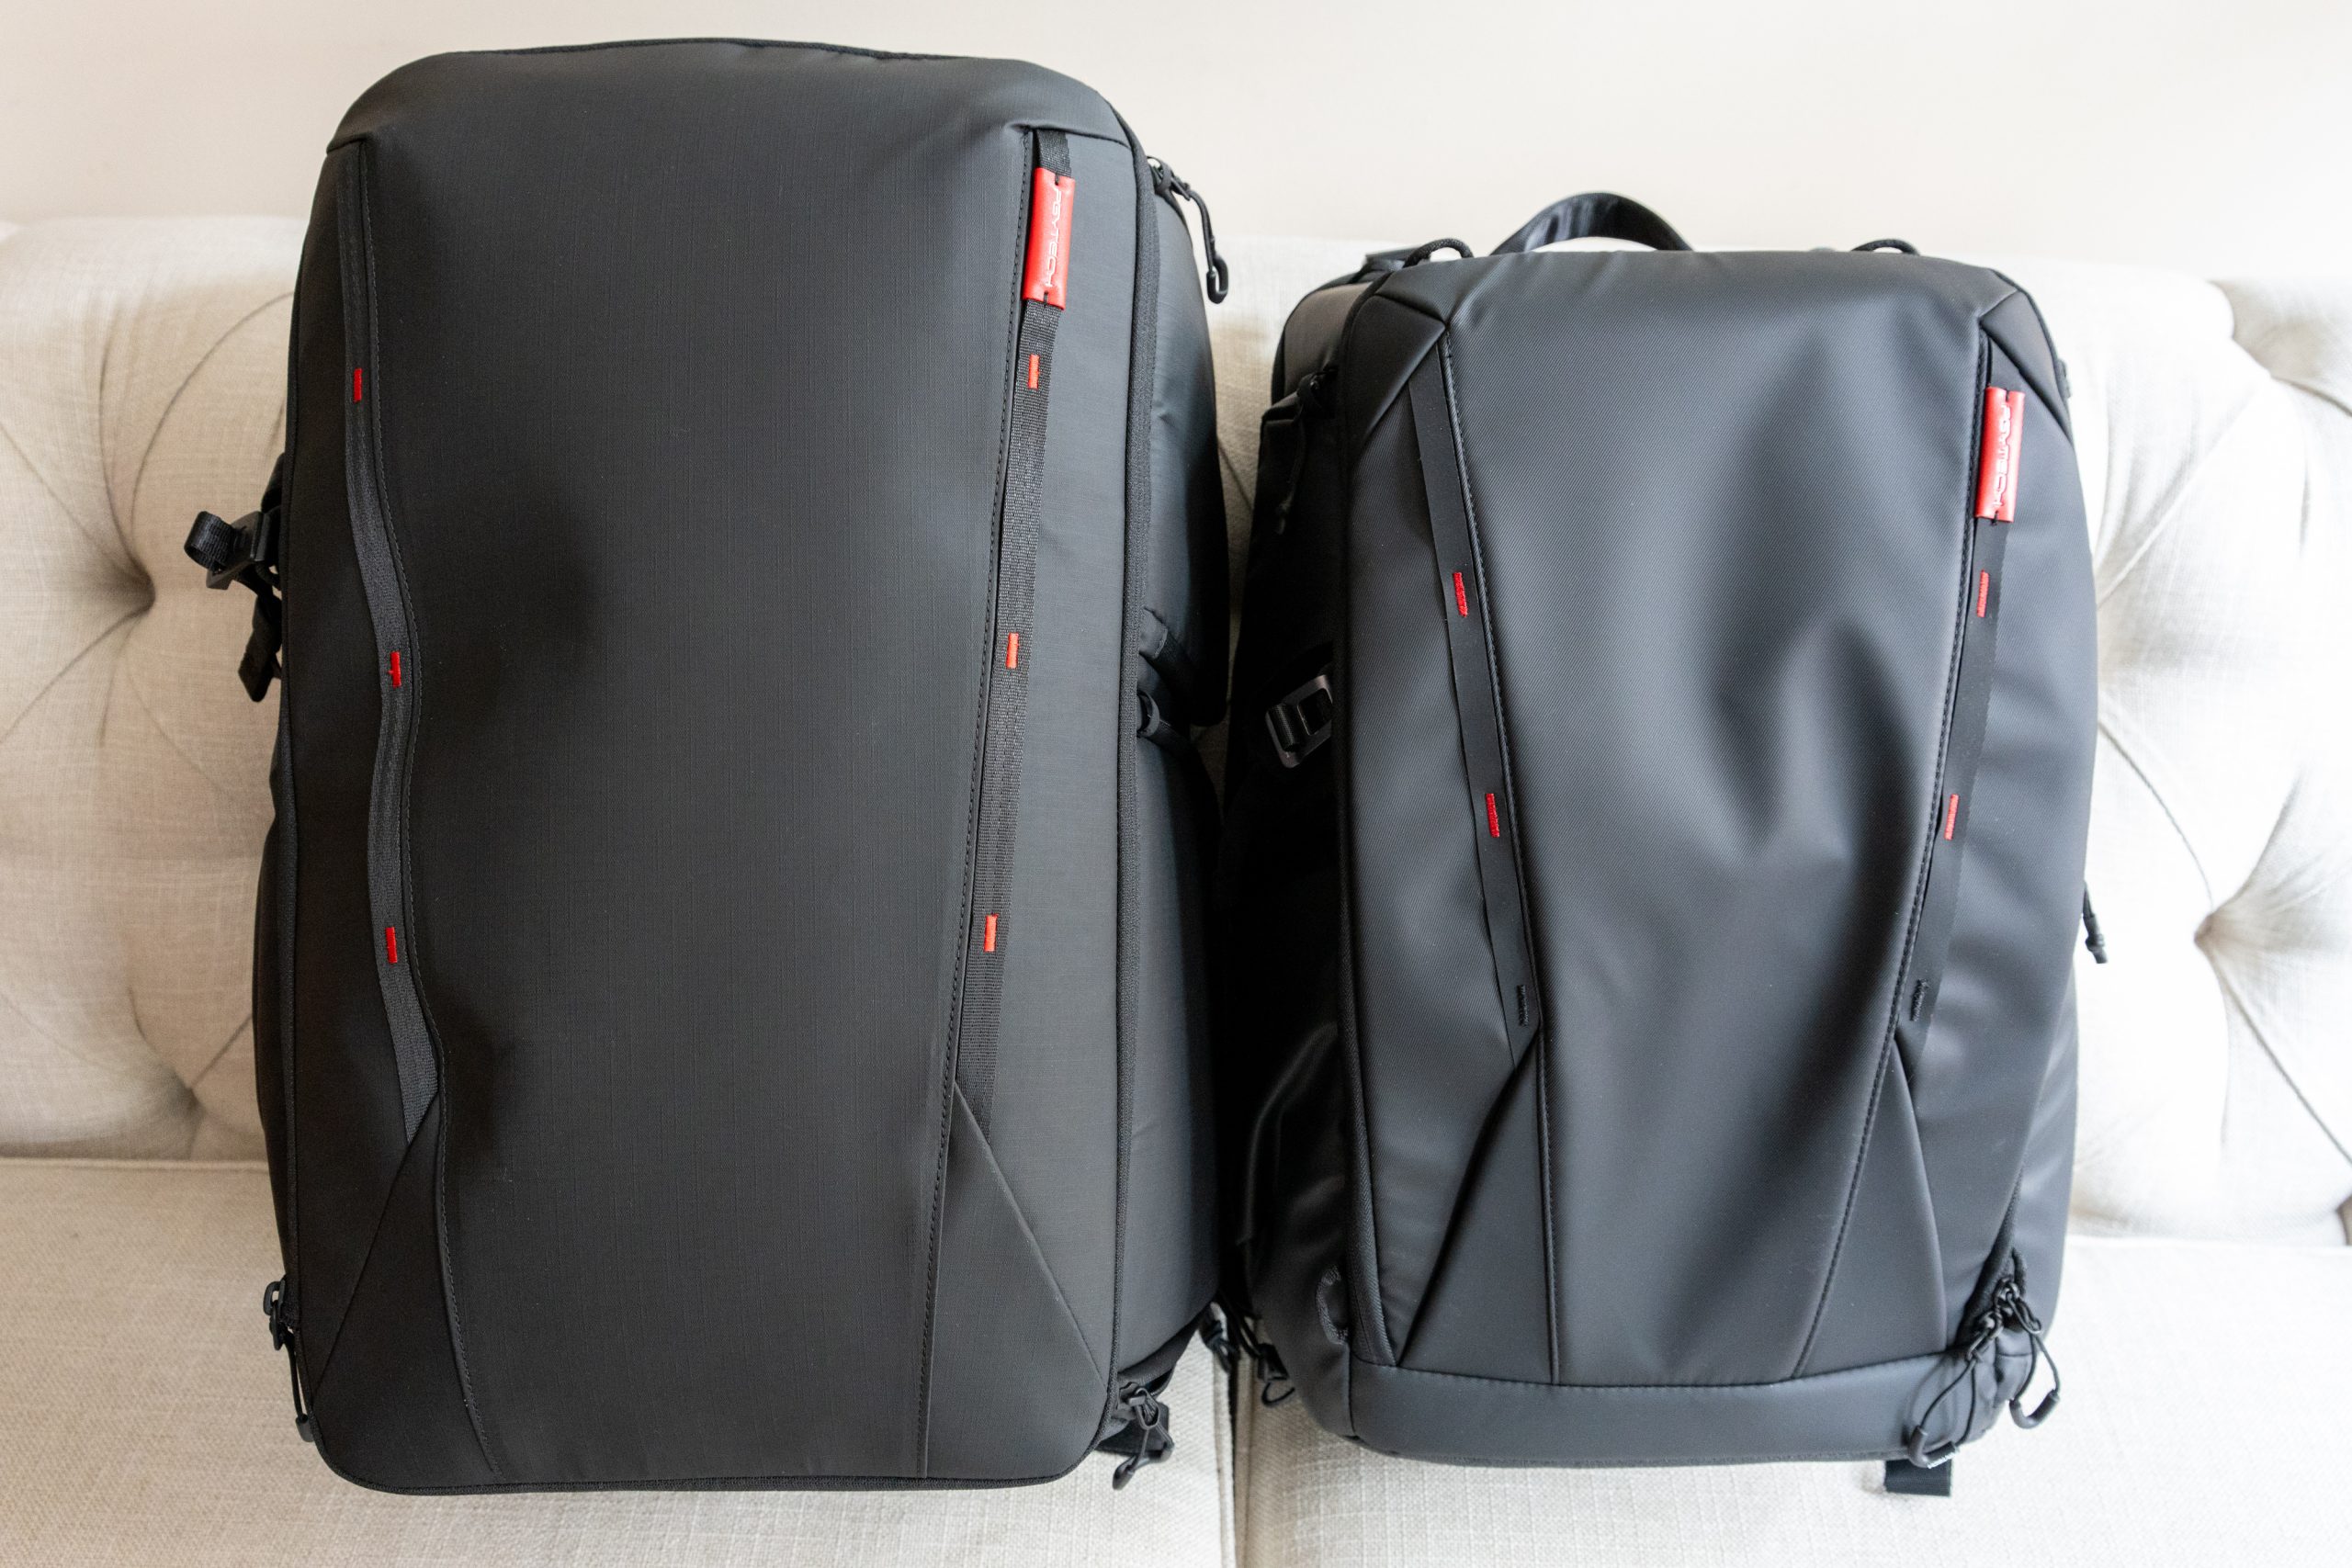 PGYTECH OneMo 2 Backpack Capacity ｜25L VS 35L 